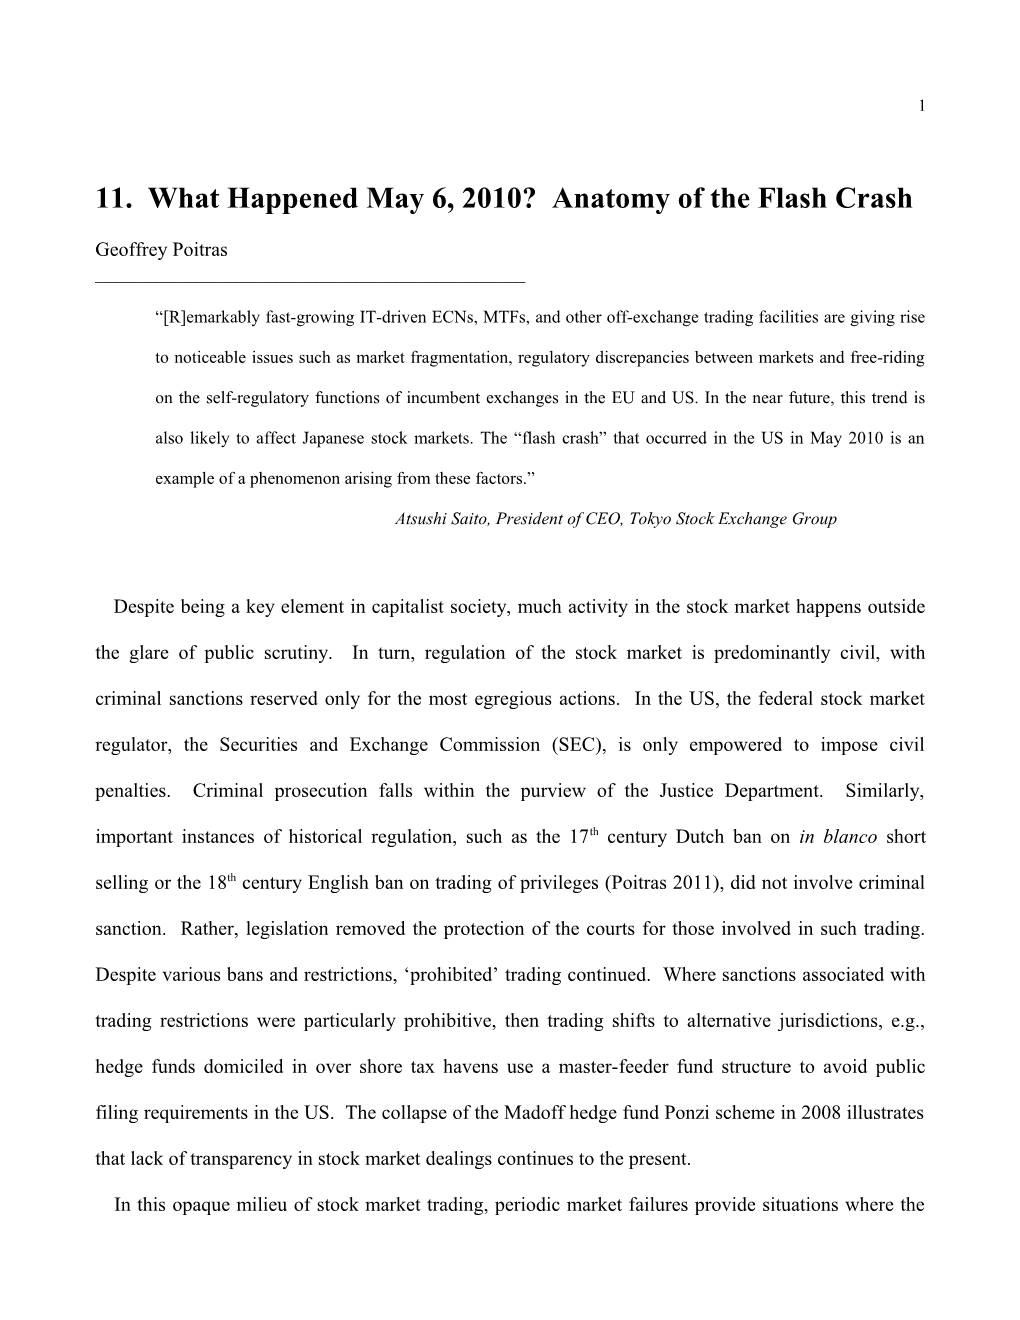 11. What Happened May 6, 2010? Anatomy of the Flash Crash